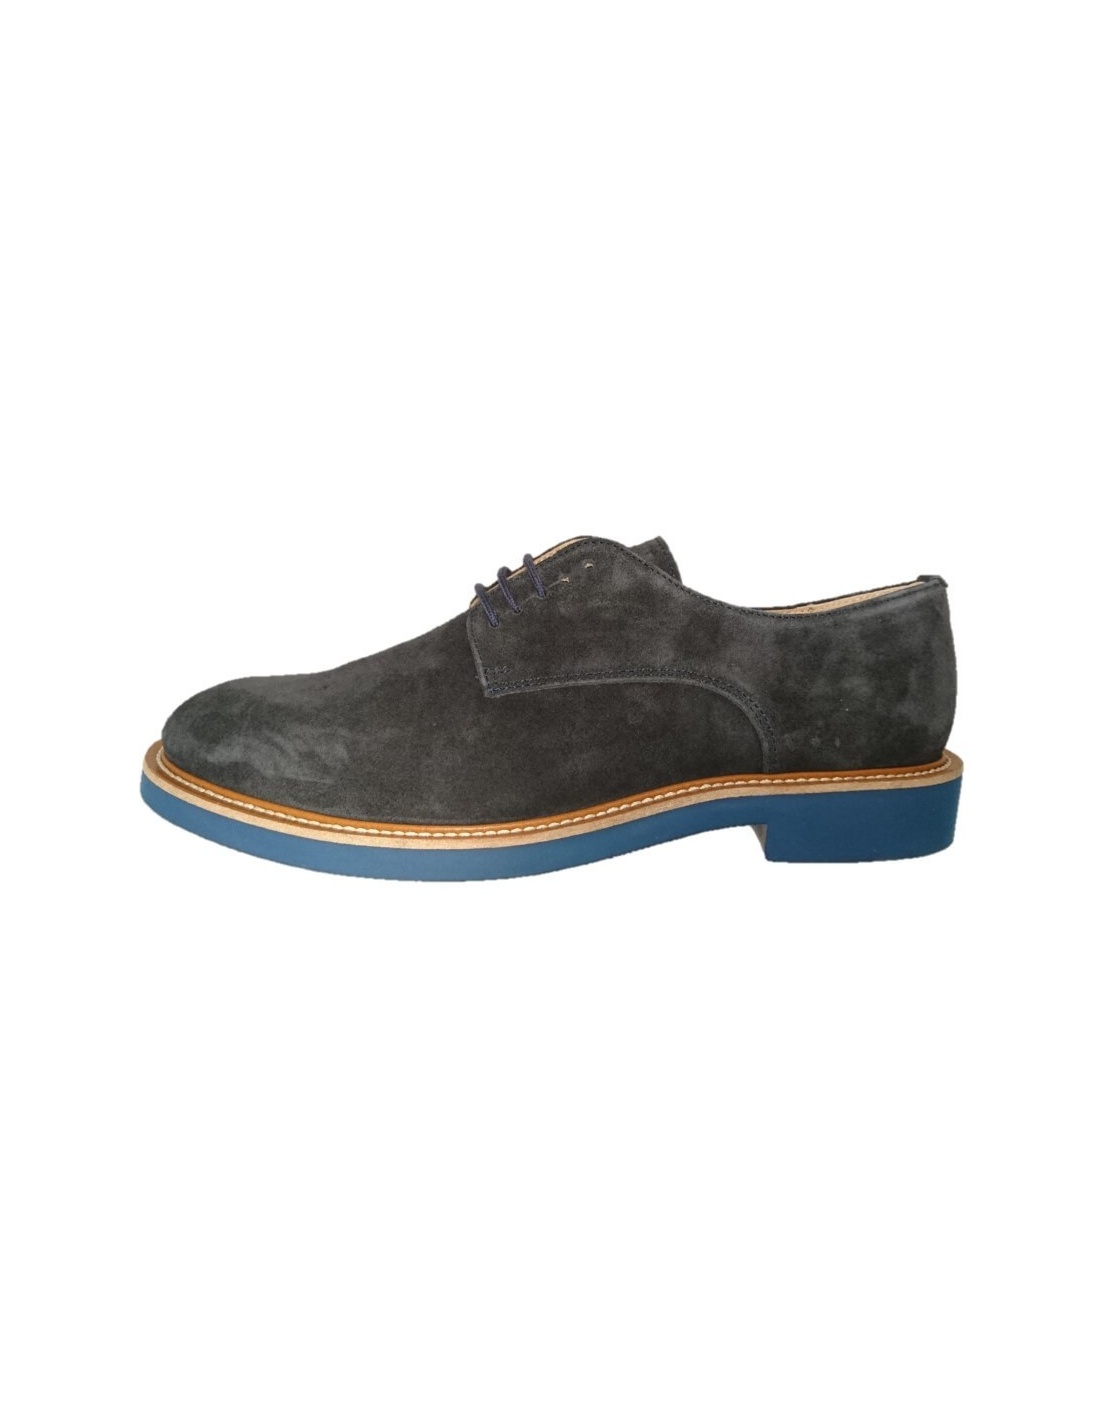 blue suede oxford shoes mens